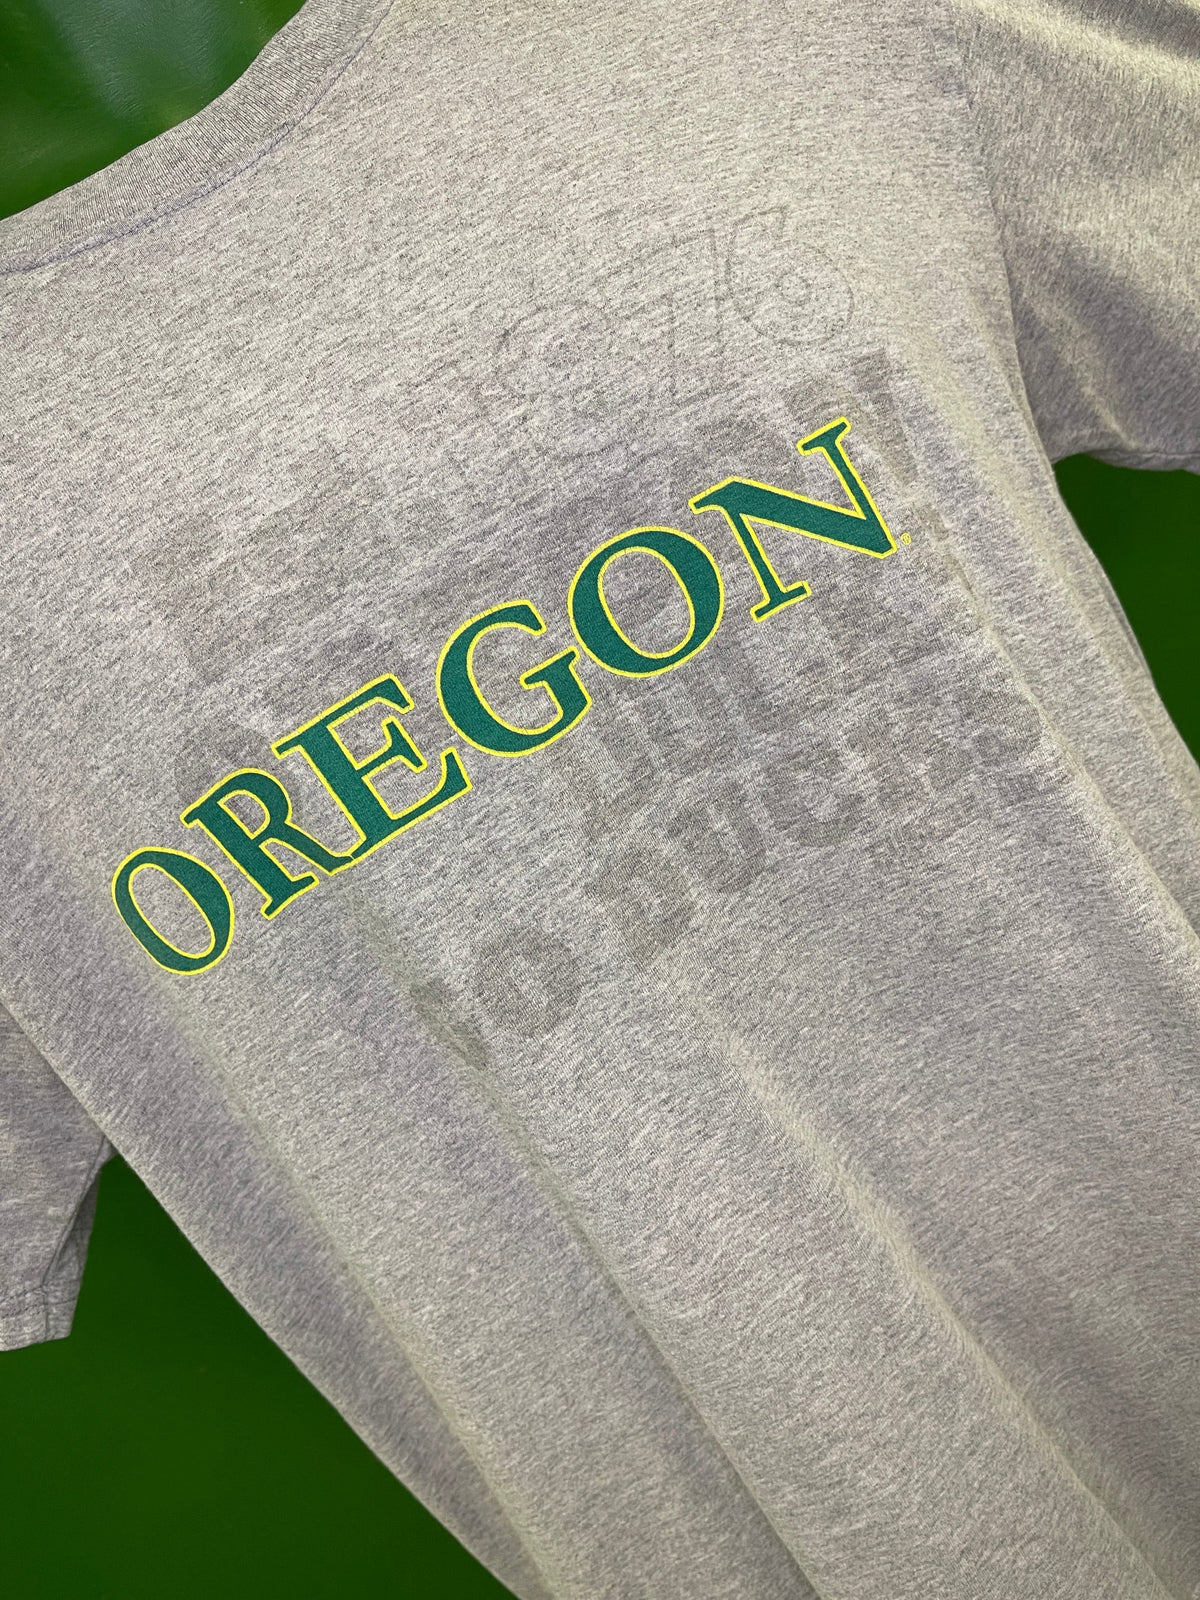 NCAA Oregon Ducks Heathered Light Grey 100% Cotton T-Shirt Men's Large